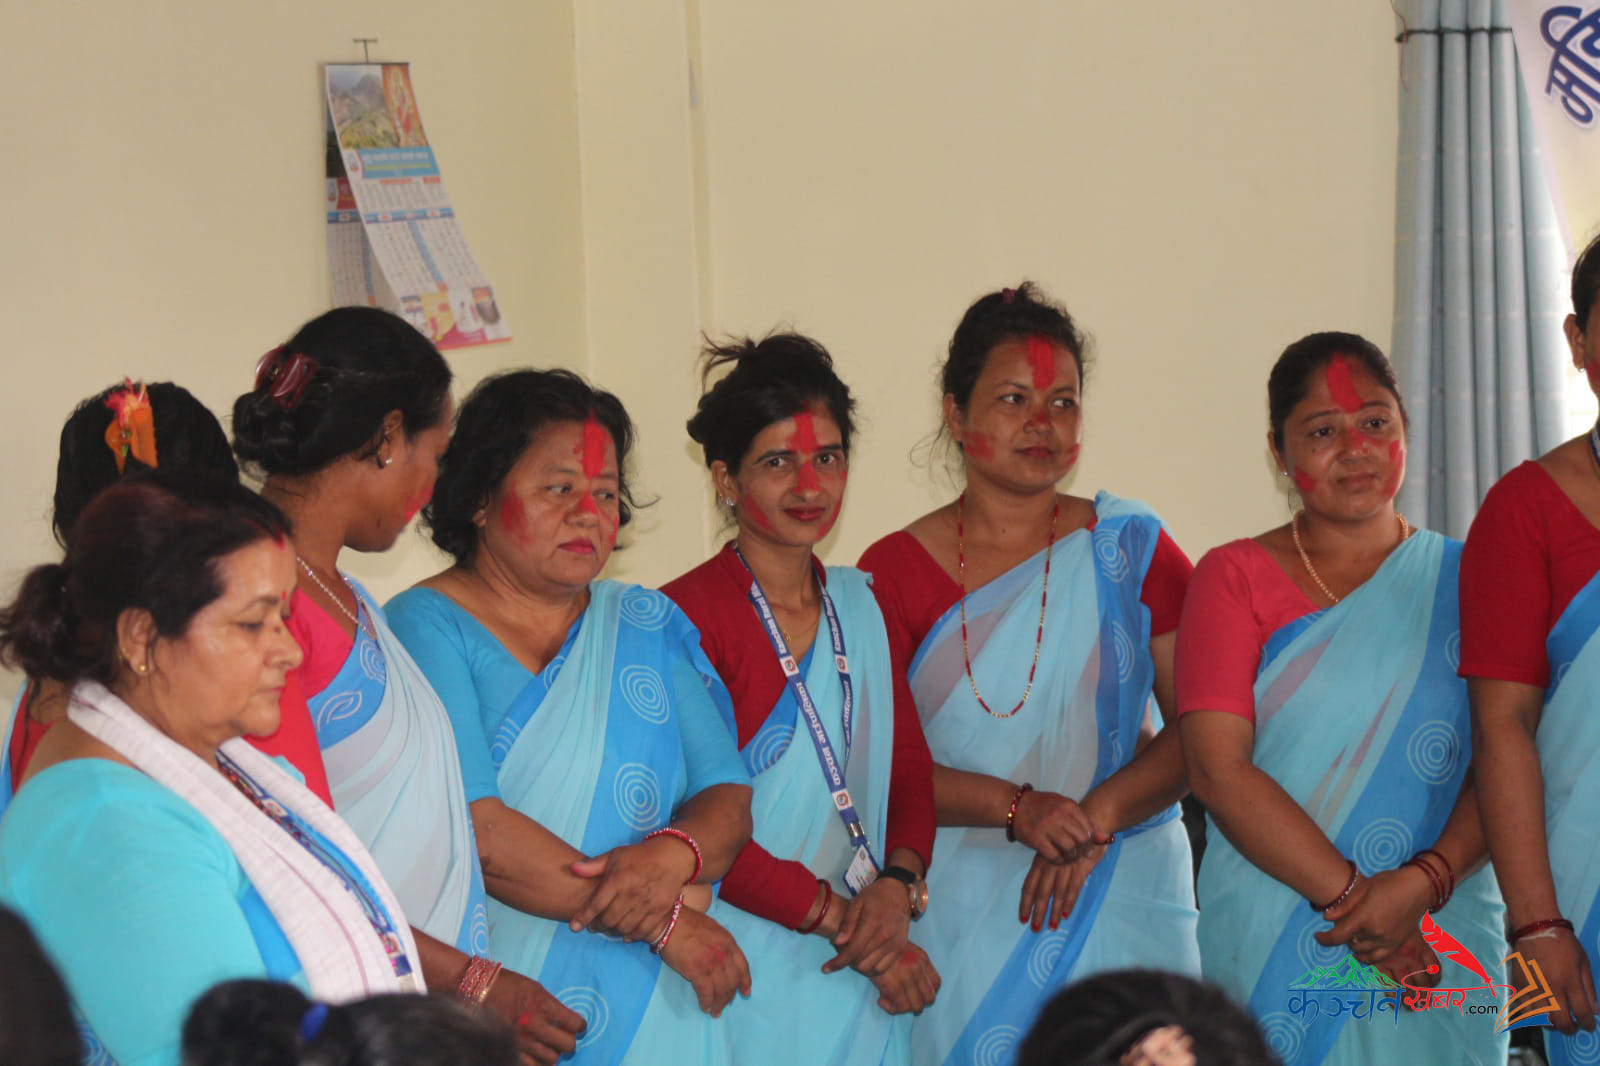 नेपाल स्वास्थ्य स्वयम सेवी संघ, कञ्चनको अधिबेशन सम्पन्न